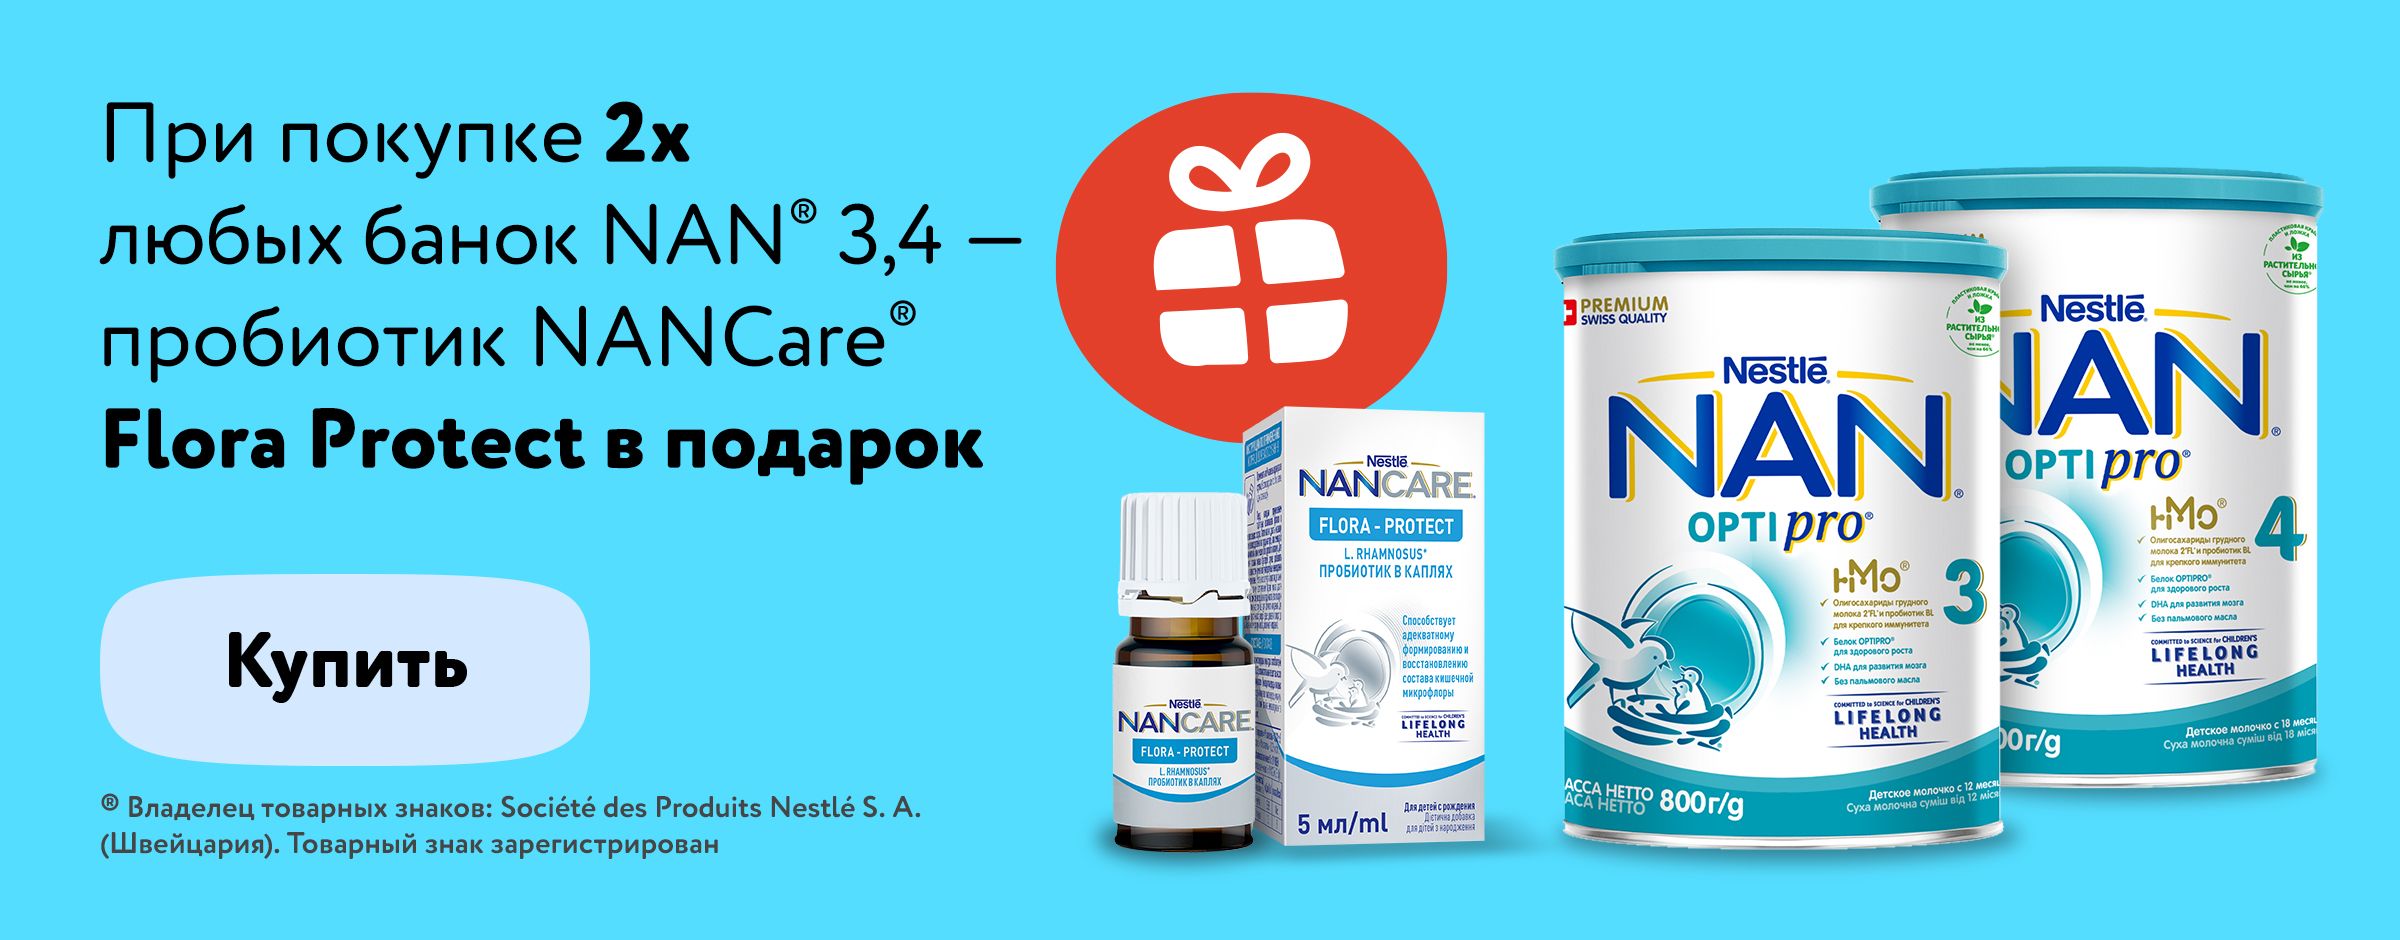 При покупке 2 банок NAN 3 и 4 800 гр — Nancare Flora Protect в подарок статика+категория